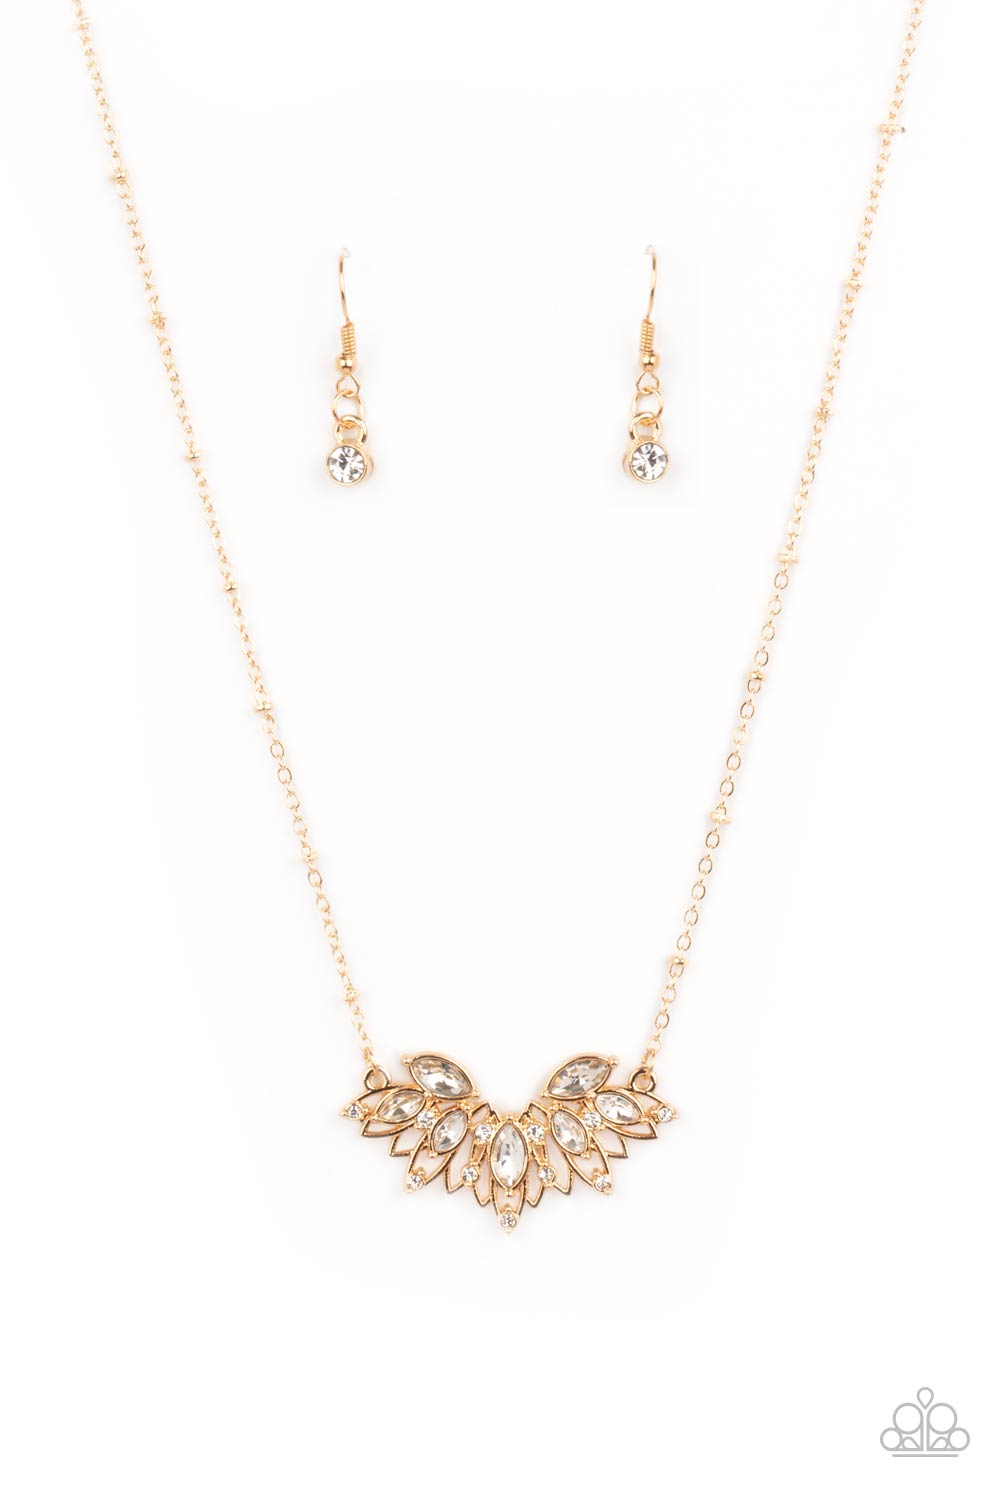 Deluxe Diadem - Gold Necklace Set - Princess Glam Shop